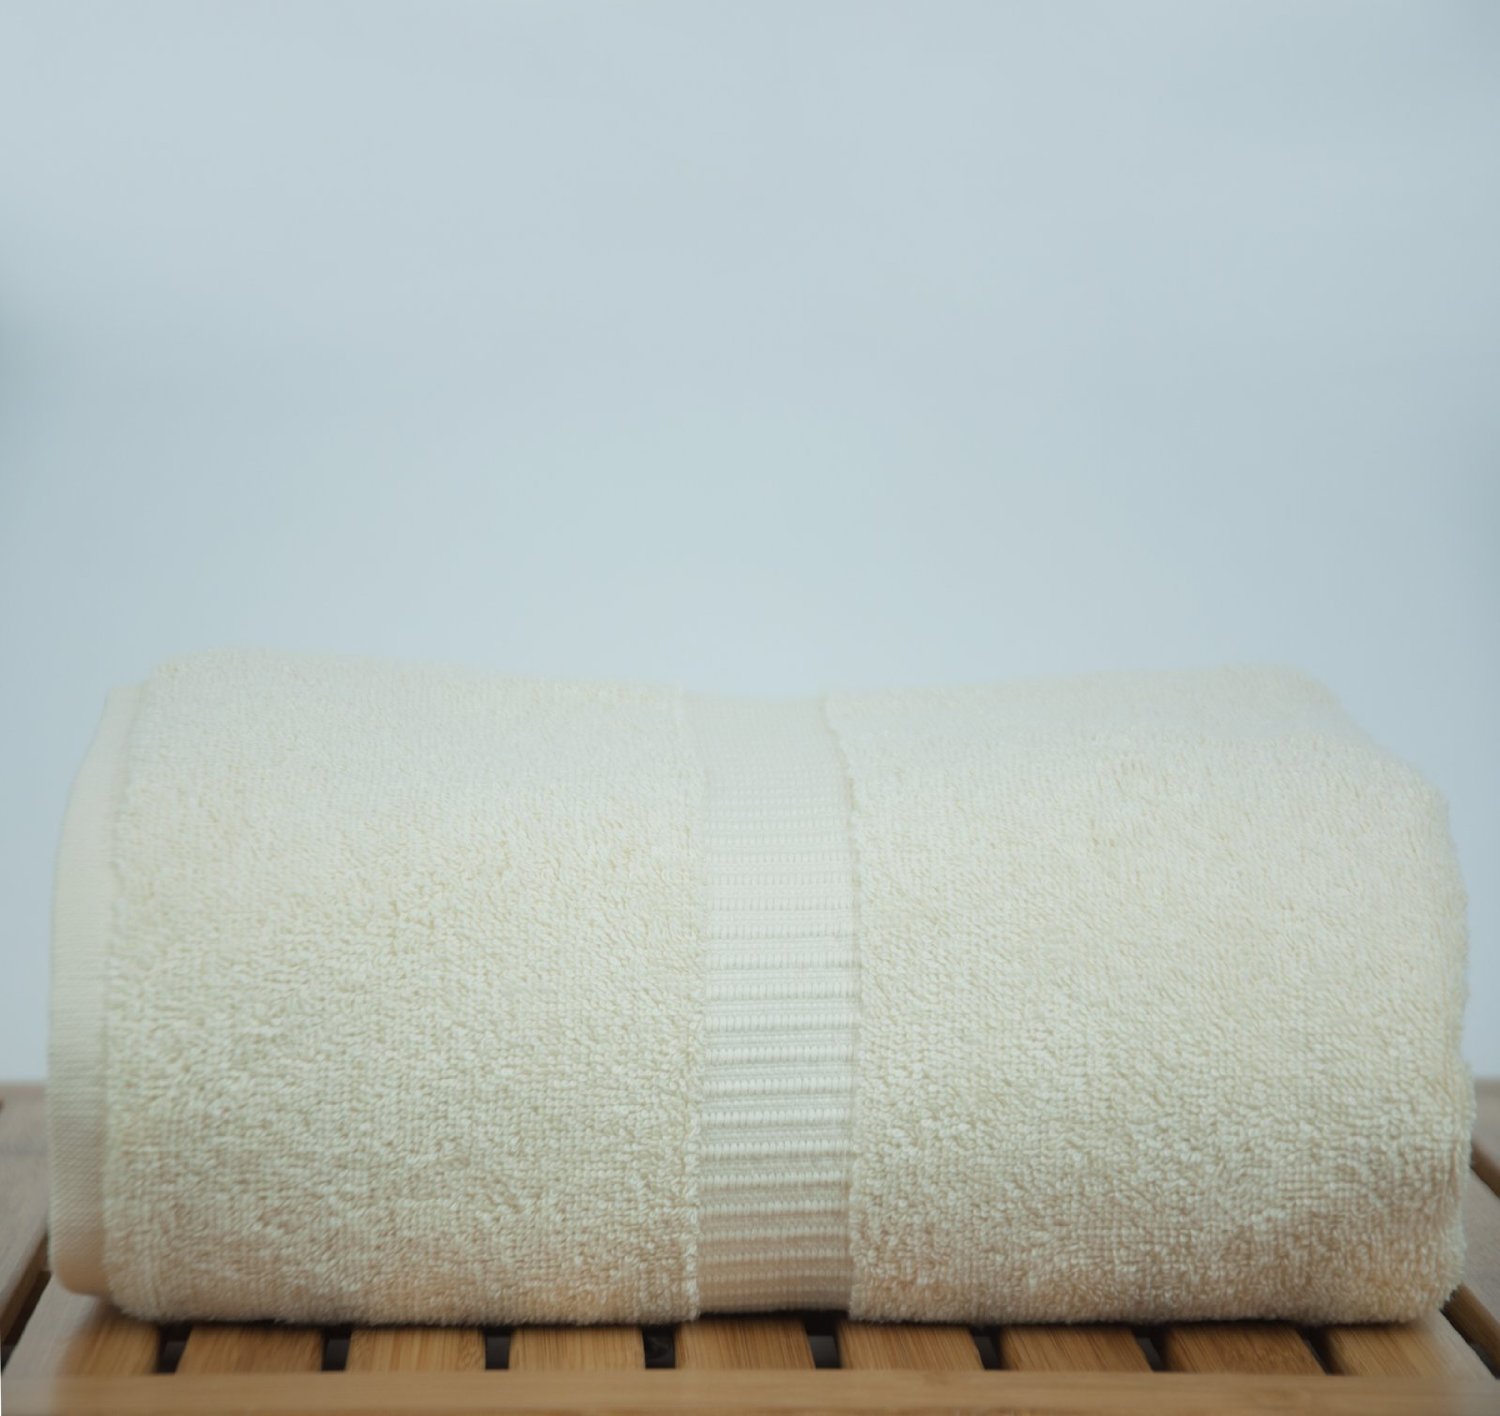 35" x 70" - 22 lbs/doz - 100% Turkish Cotton Beige Bath Sheet Towel - Dobby Border-Robemart.com